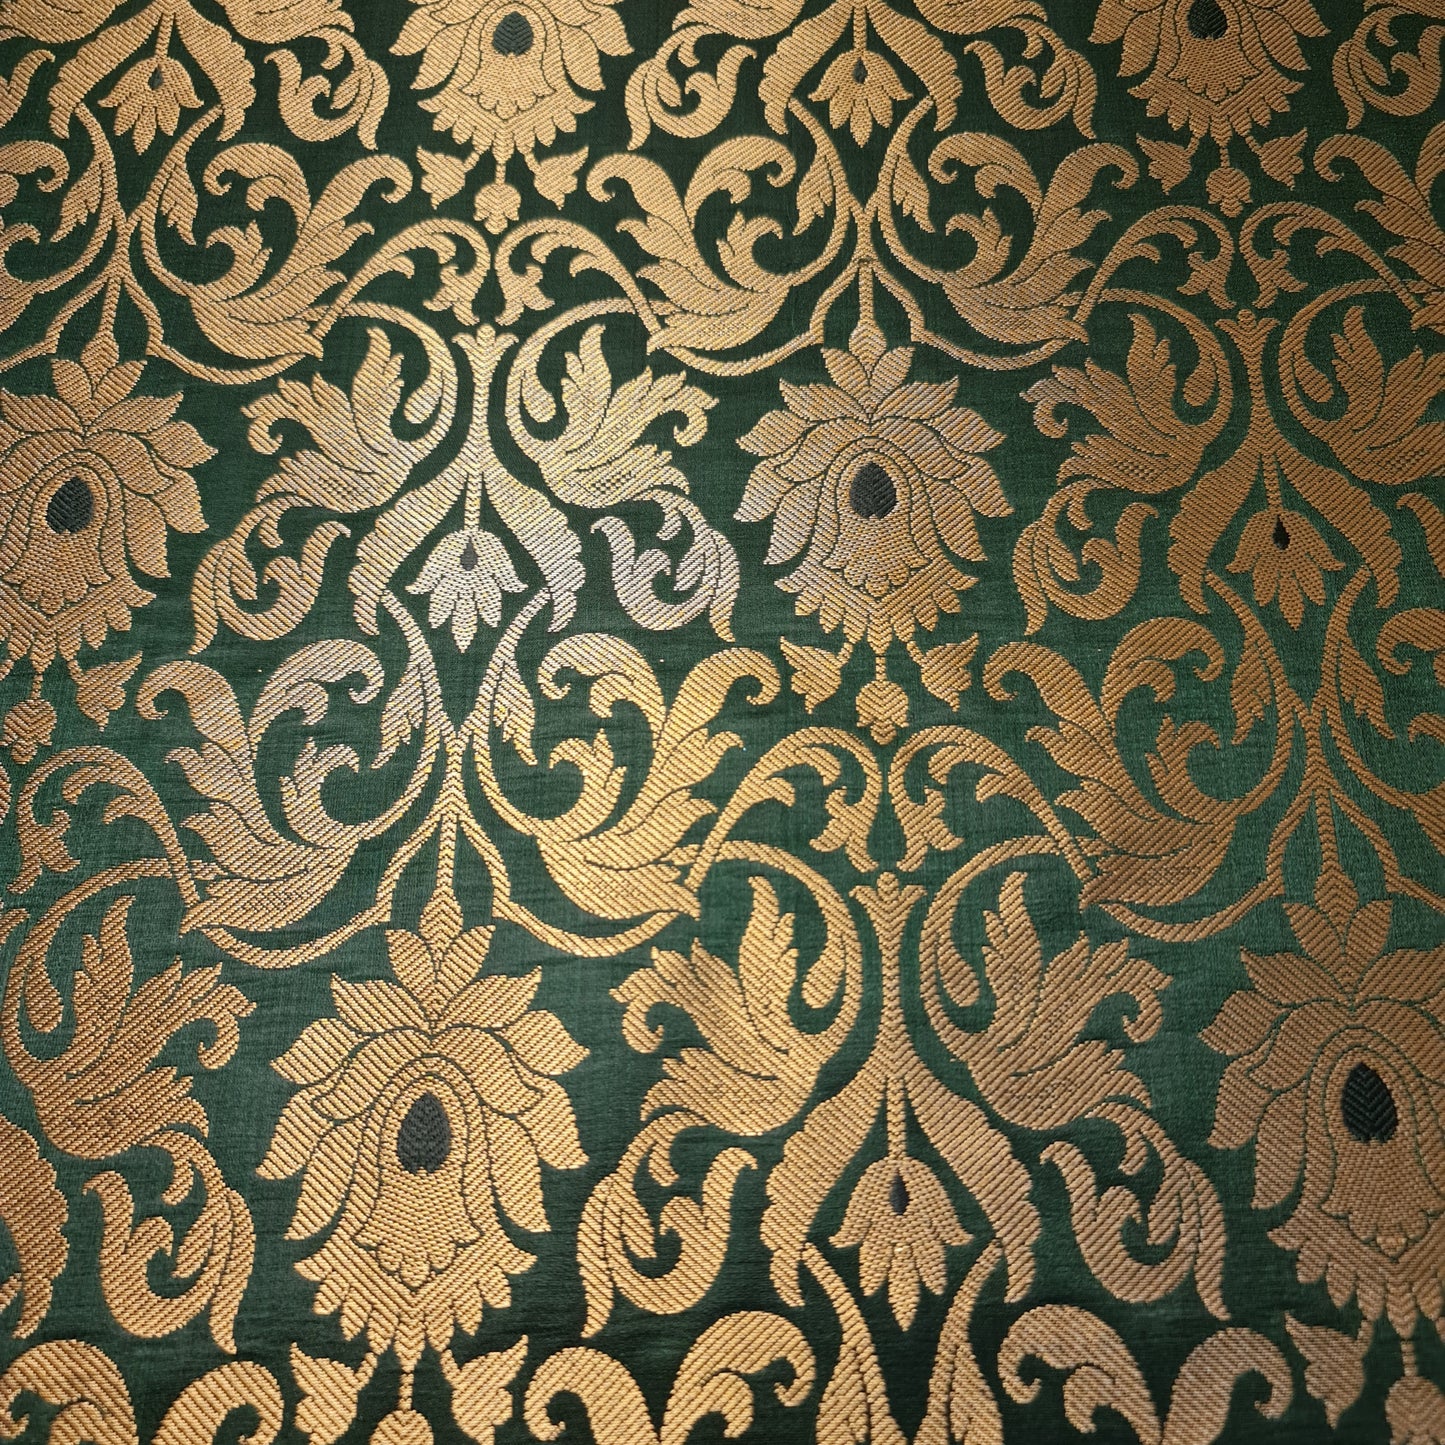 Luxurious Floral Gold Metallic Indian Banarasi Brocade Fabric 44" By The Meter (Bottle Green)